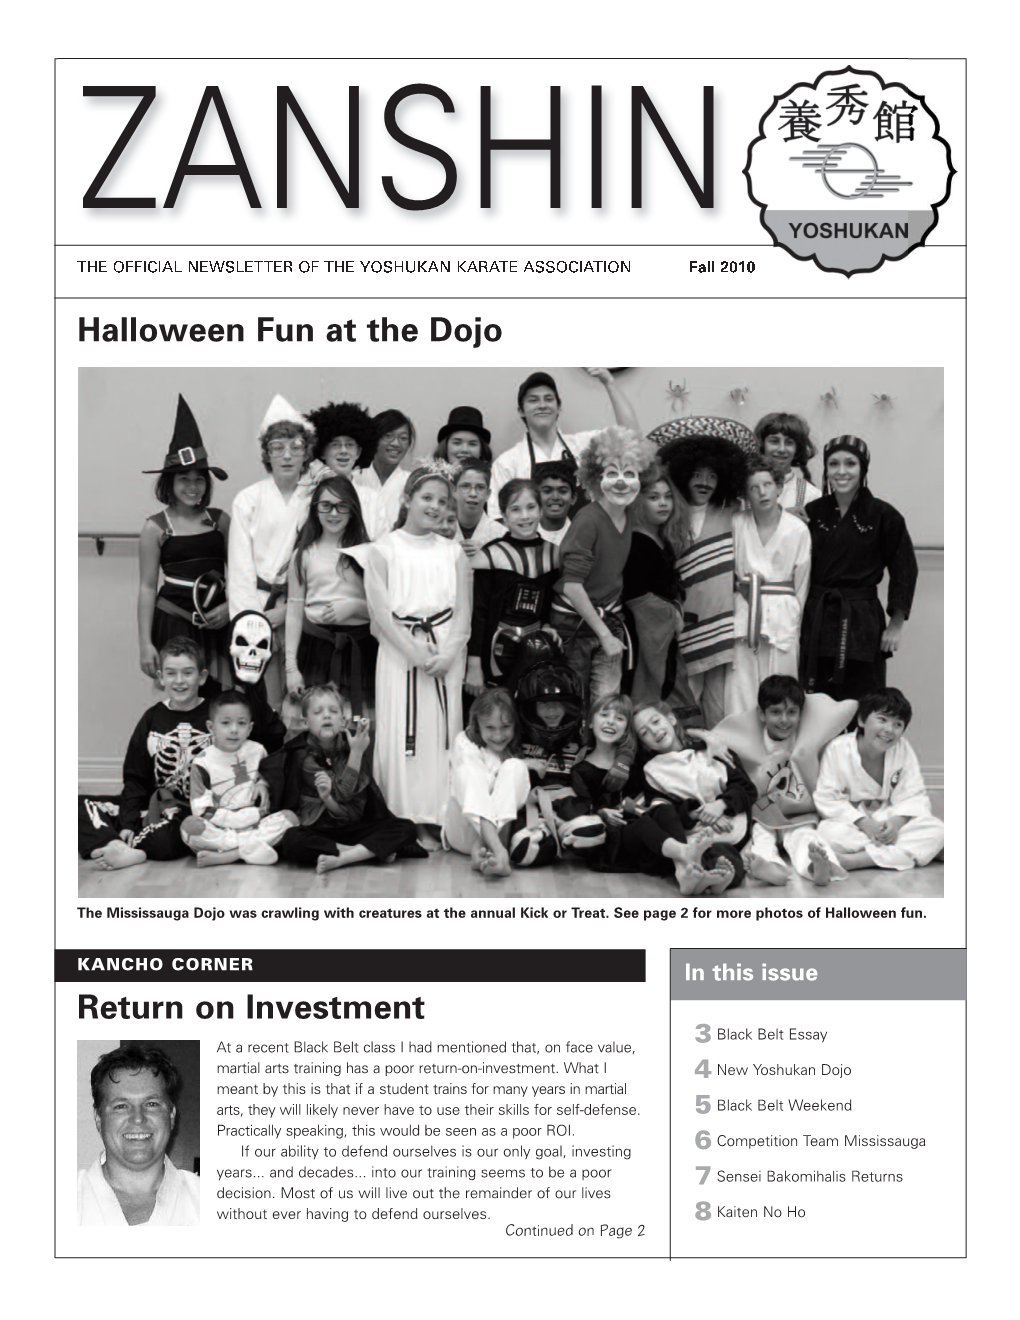 ZANSHIN the OFFICIAL NEWSLETTER of the YOSHUKAN KARATE ASSOCIATION Fall 2010